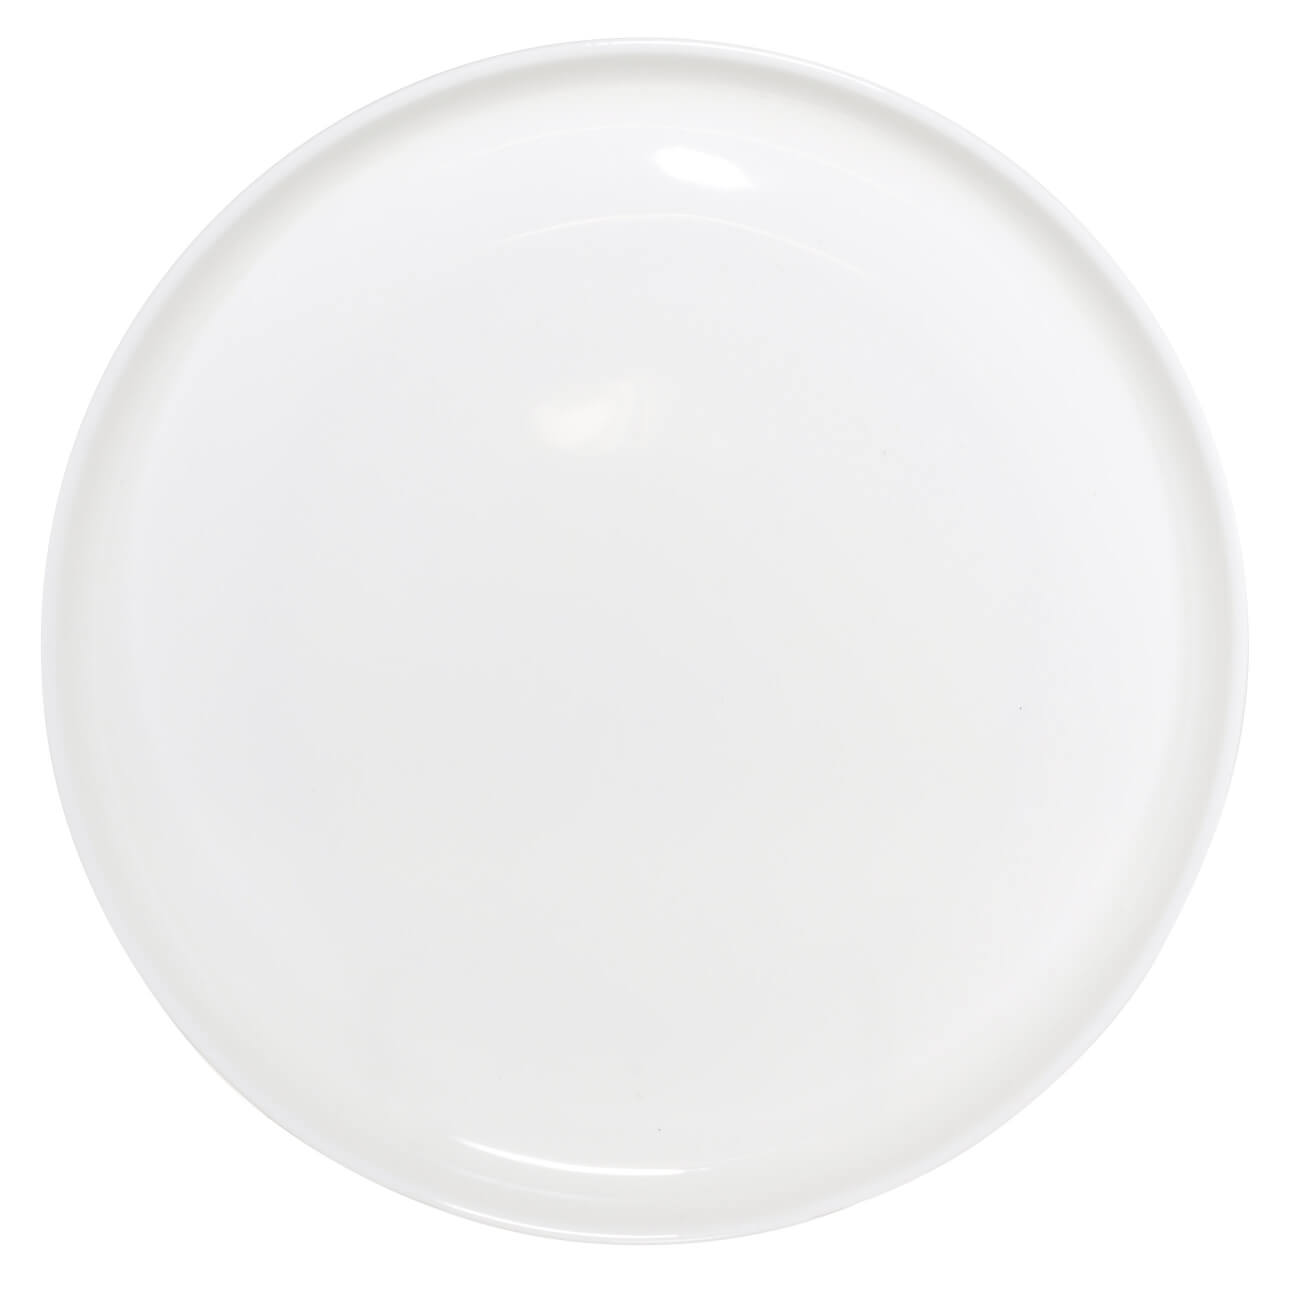 Тарелка обеденная, 26 см, фарфор F, белая, Ideal white салатник 15х7 см 800 мл фарфор f белая ideal white